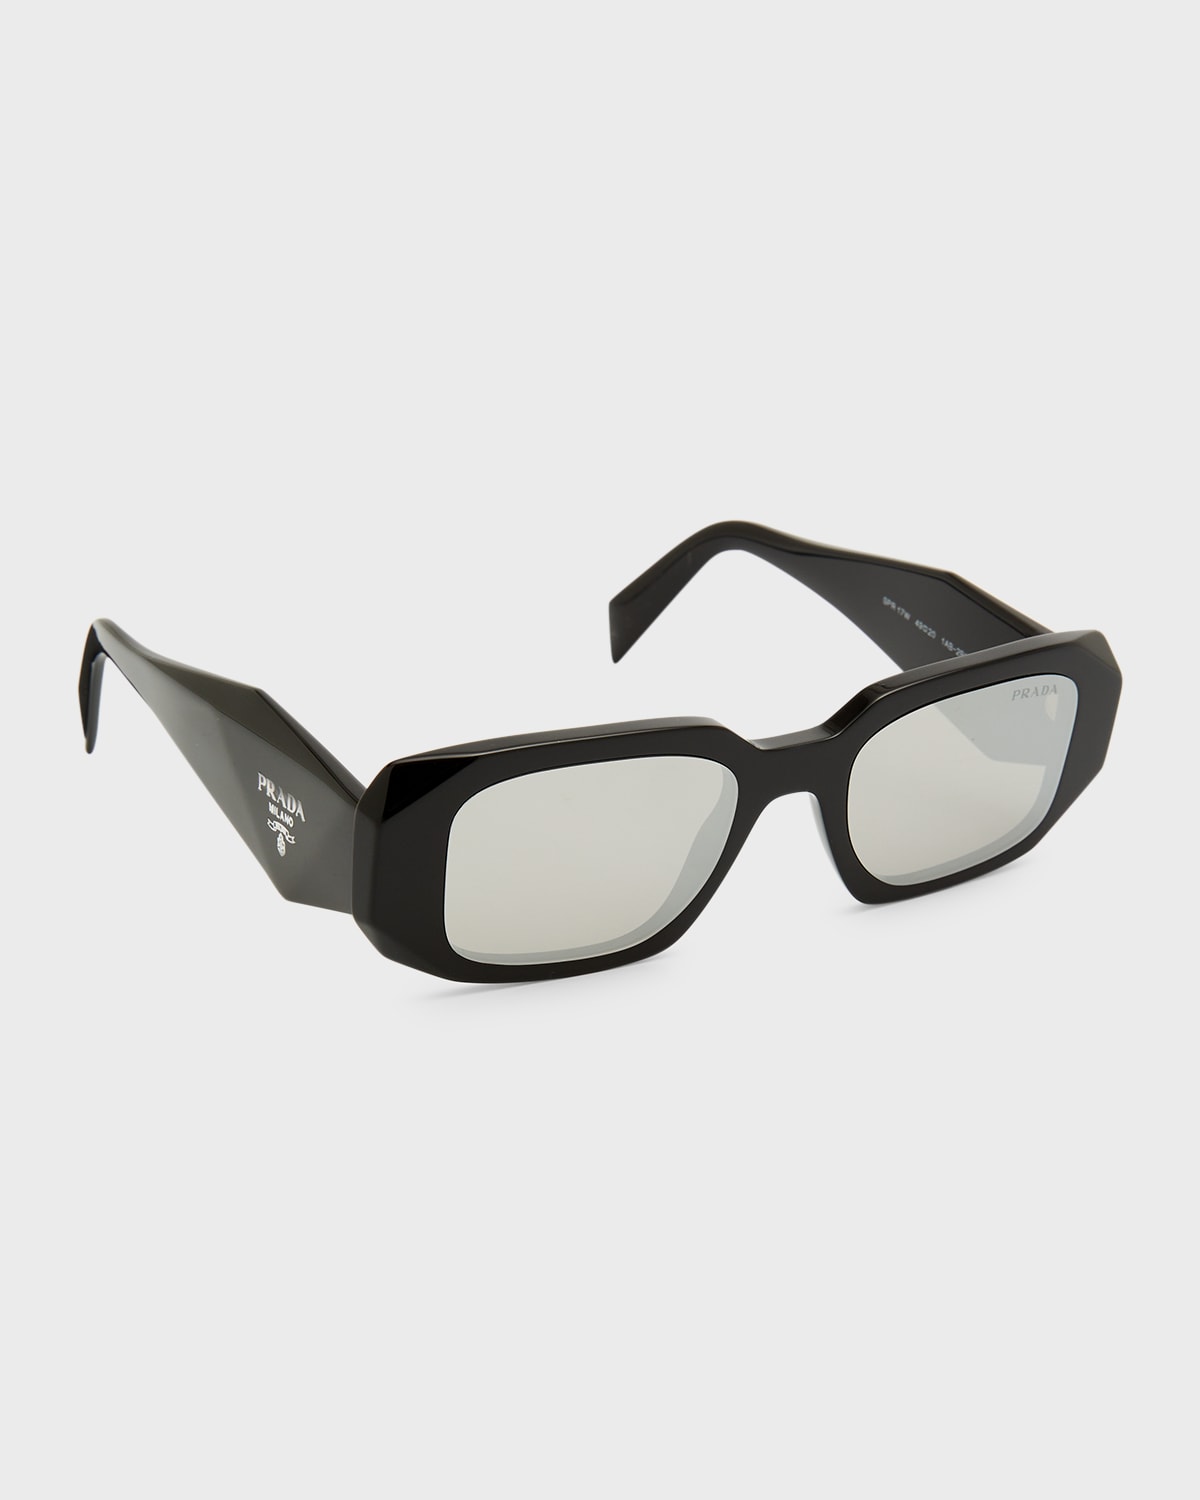 Prada Mirrored Rectangle Acetate Logo Sunglasses In Black/silver Mirror